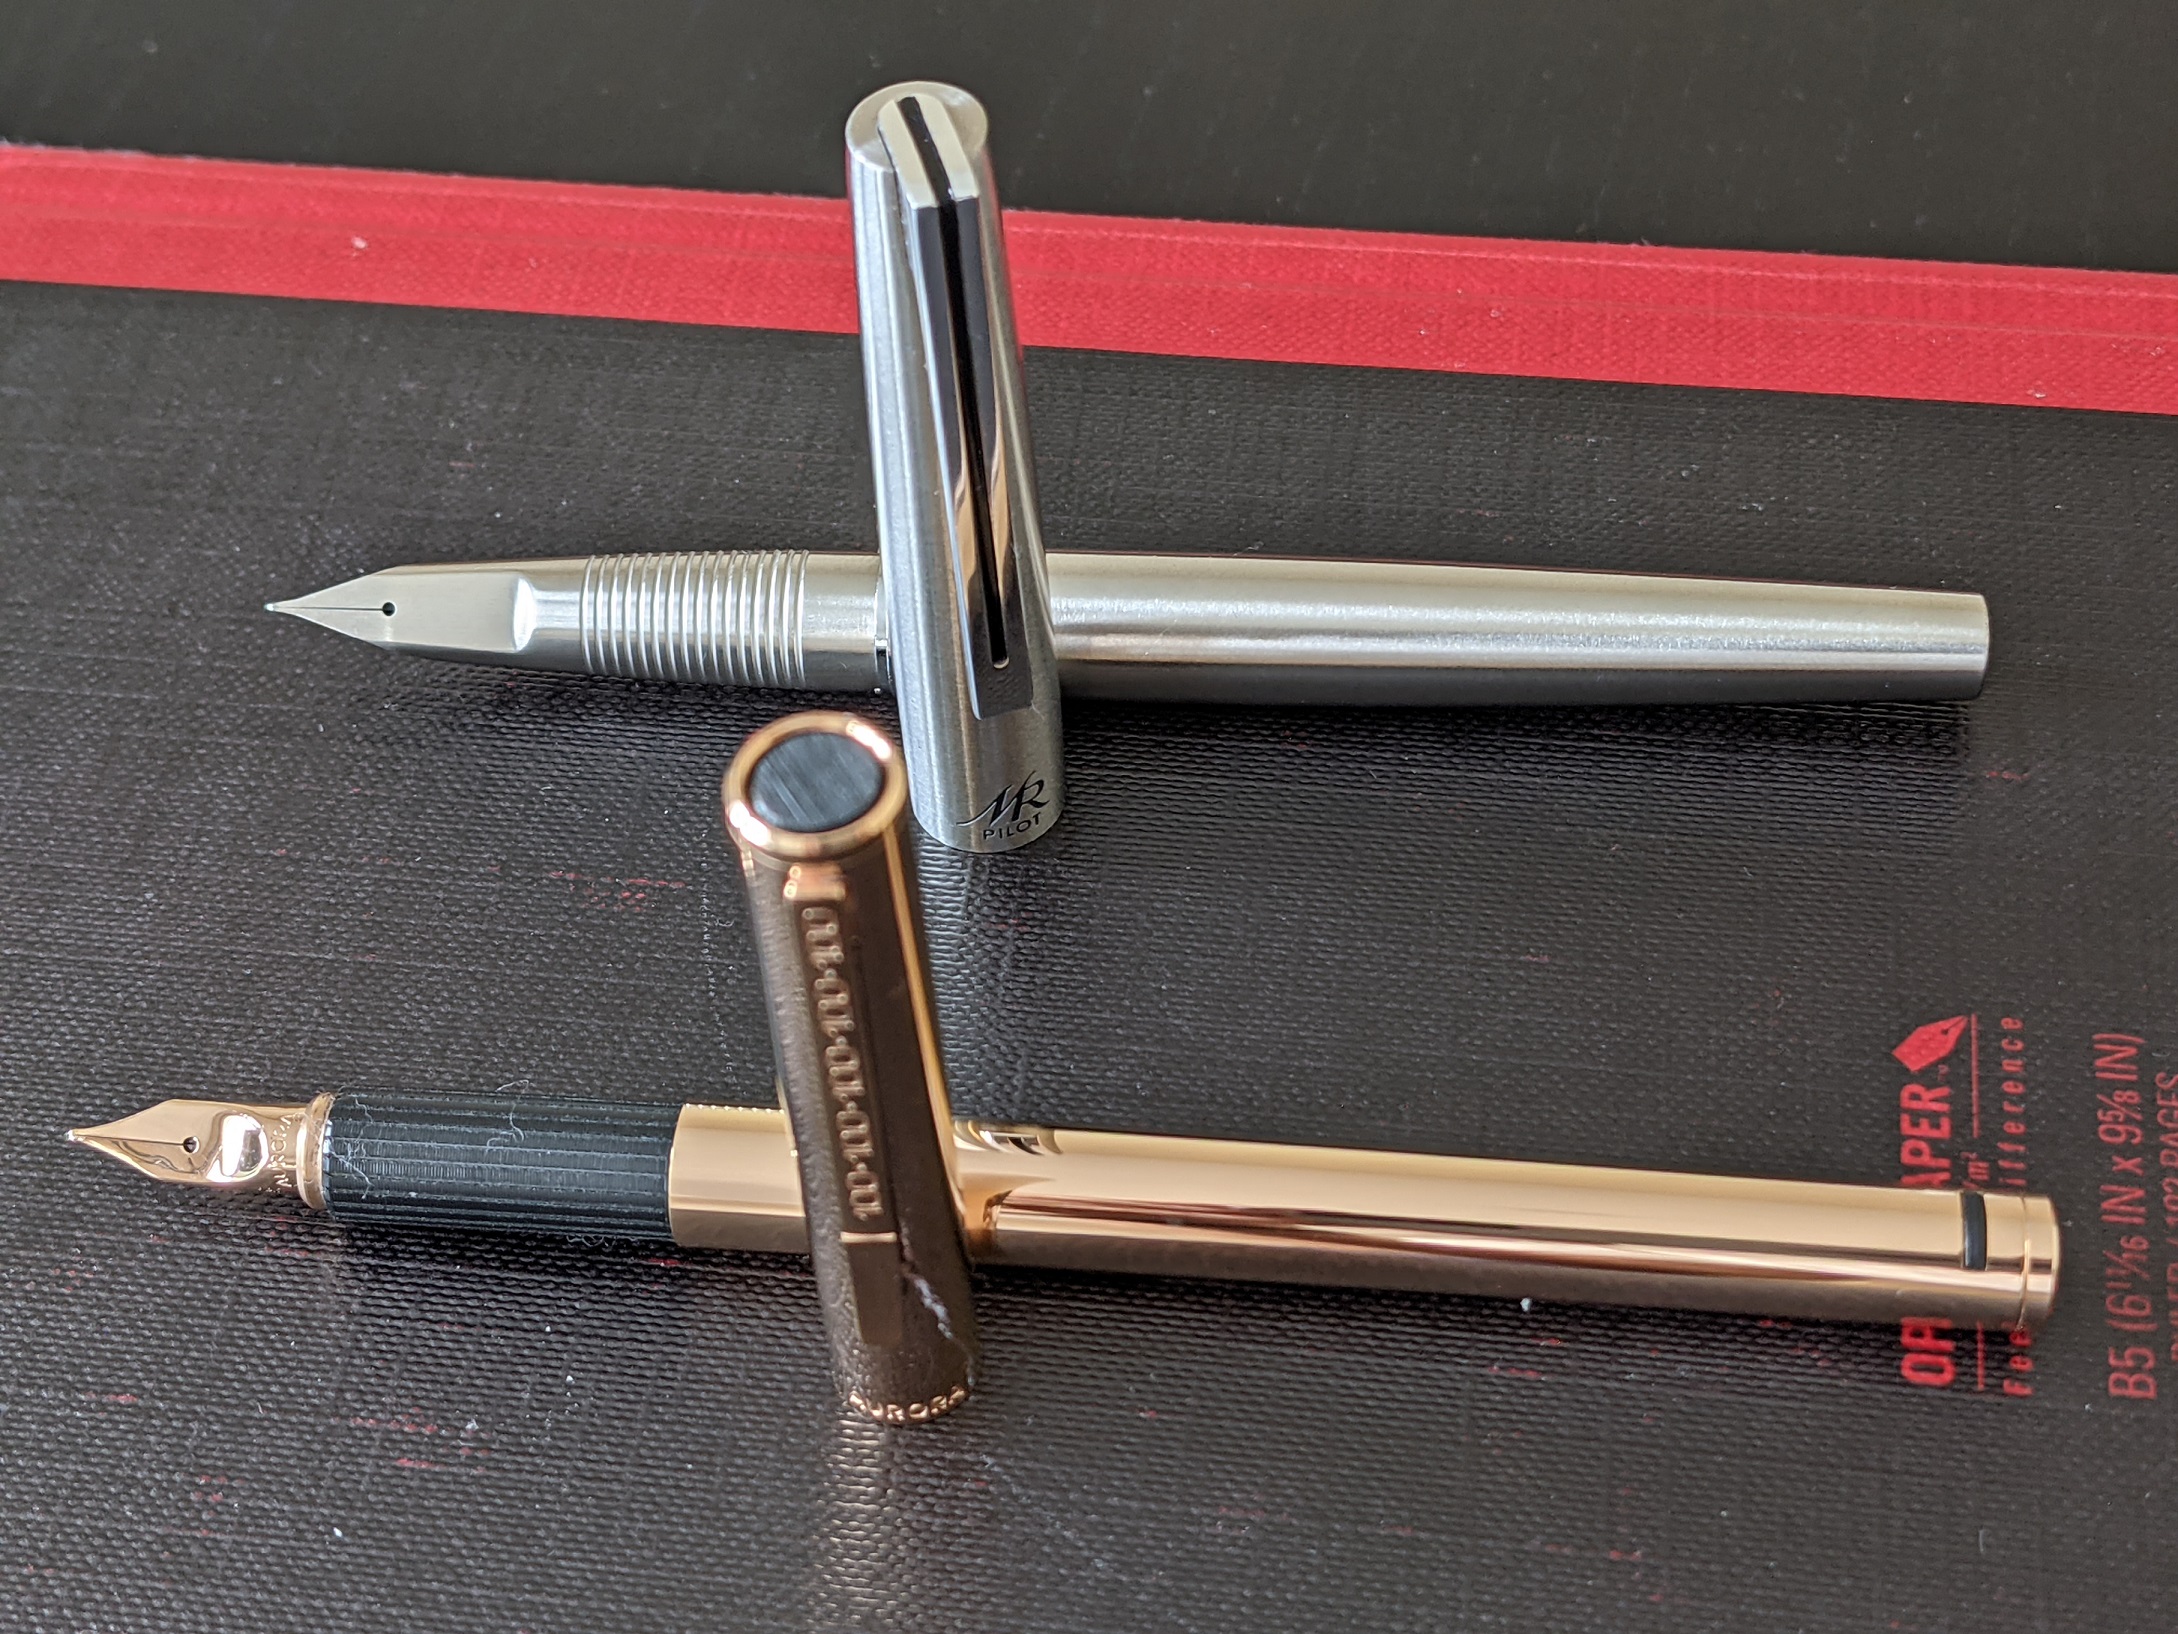 Pens and Pencils: : Pilot and Aurora: Pilot Murex and Aurora Hastil Centol (100th Anniversary pen)